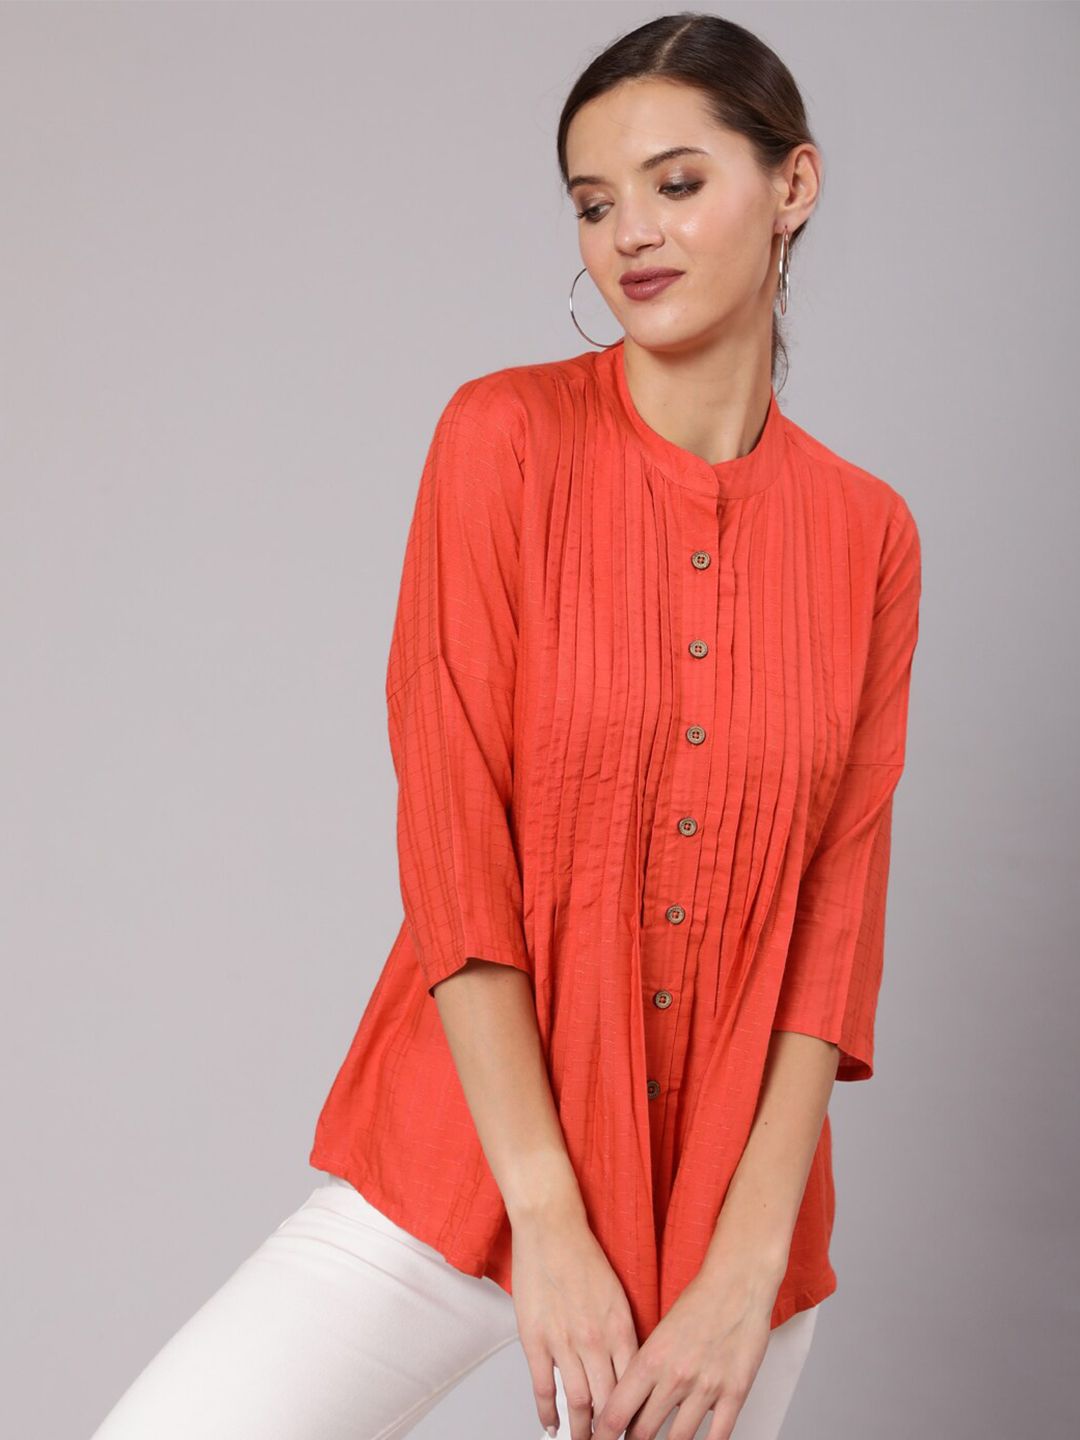 Jaipur Kurti Mandarin Collar Shirt Style Top Price in India